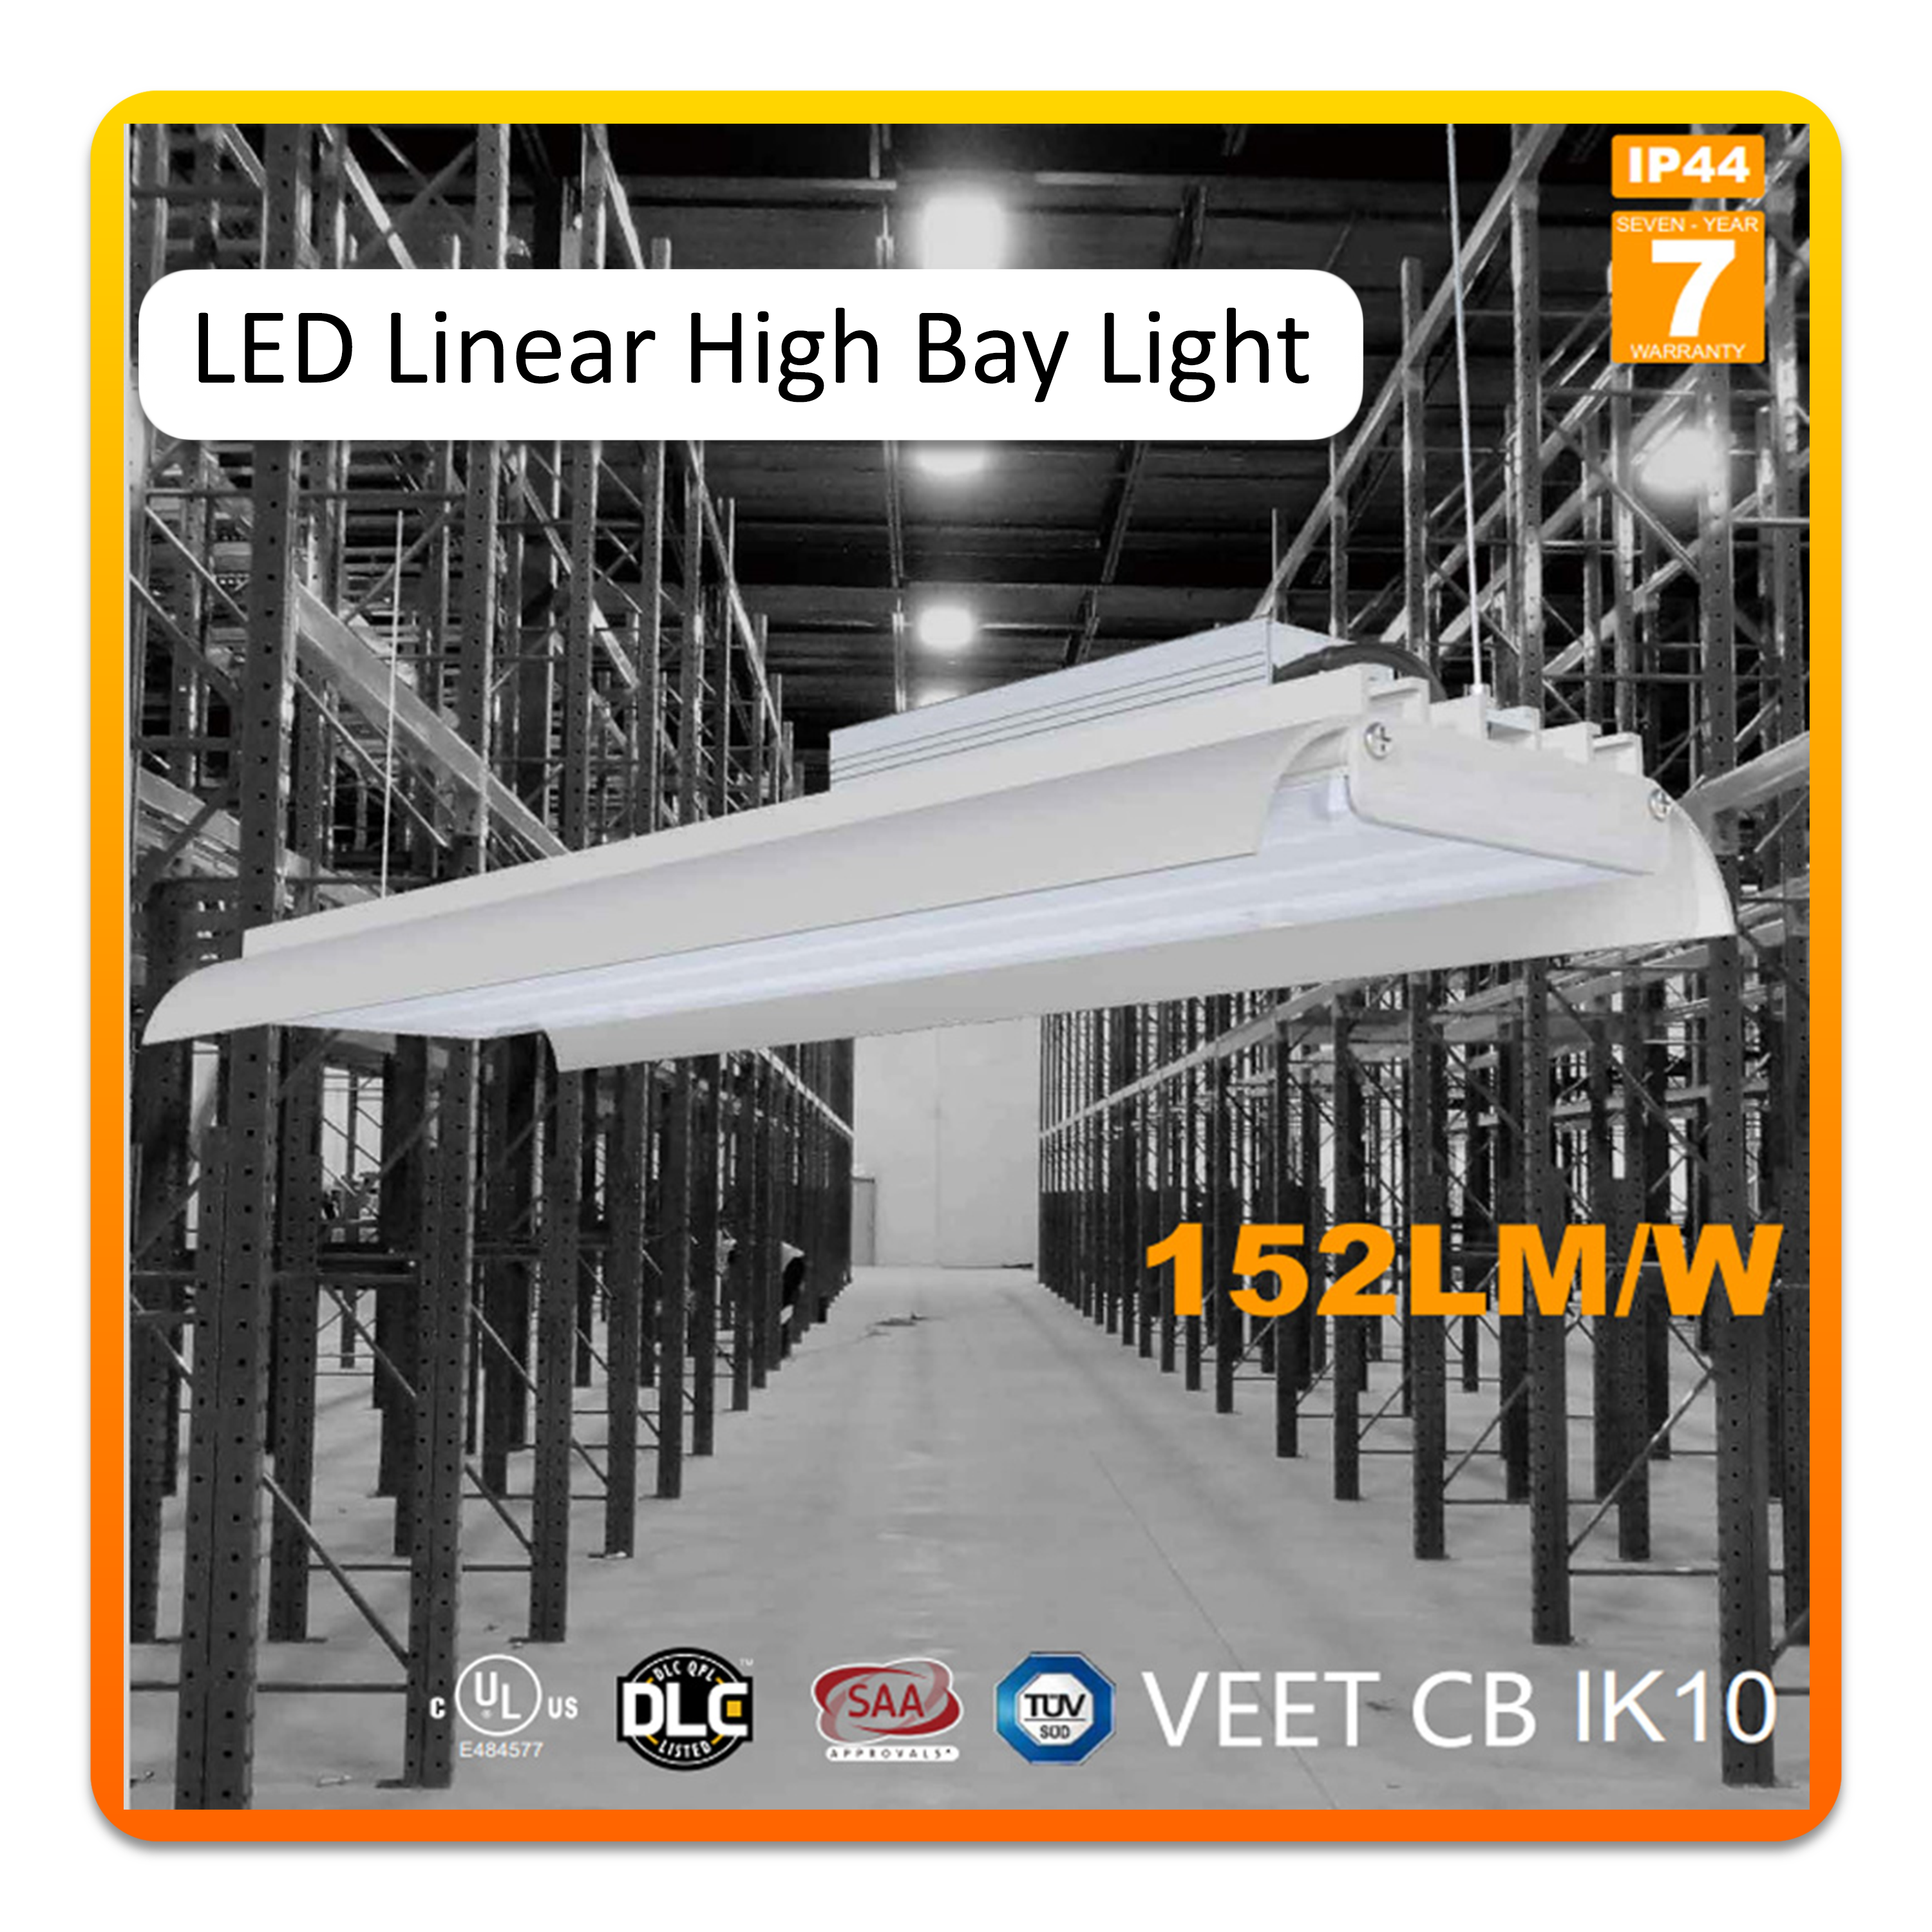 LED Linear High Bay Light.png